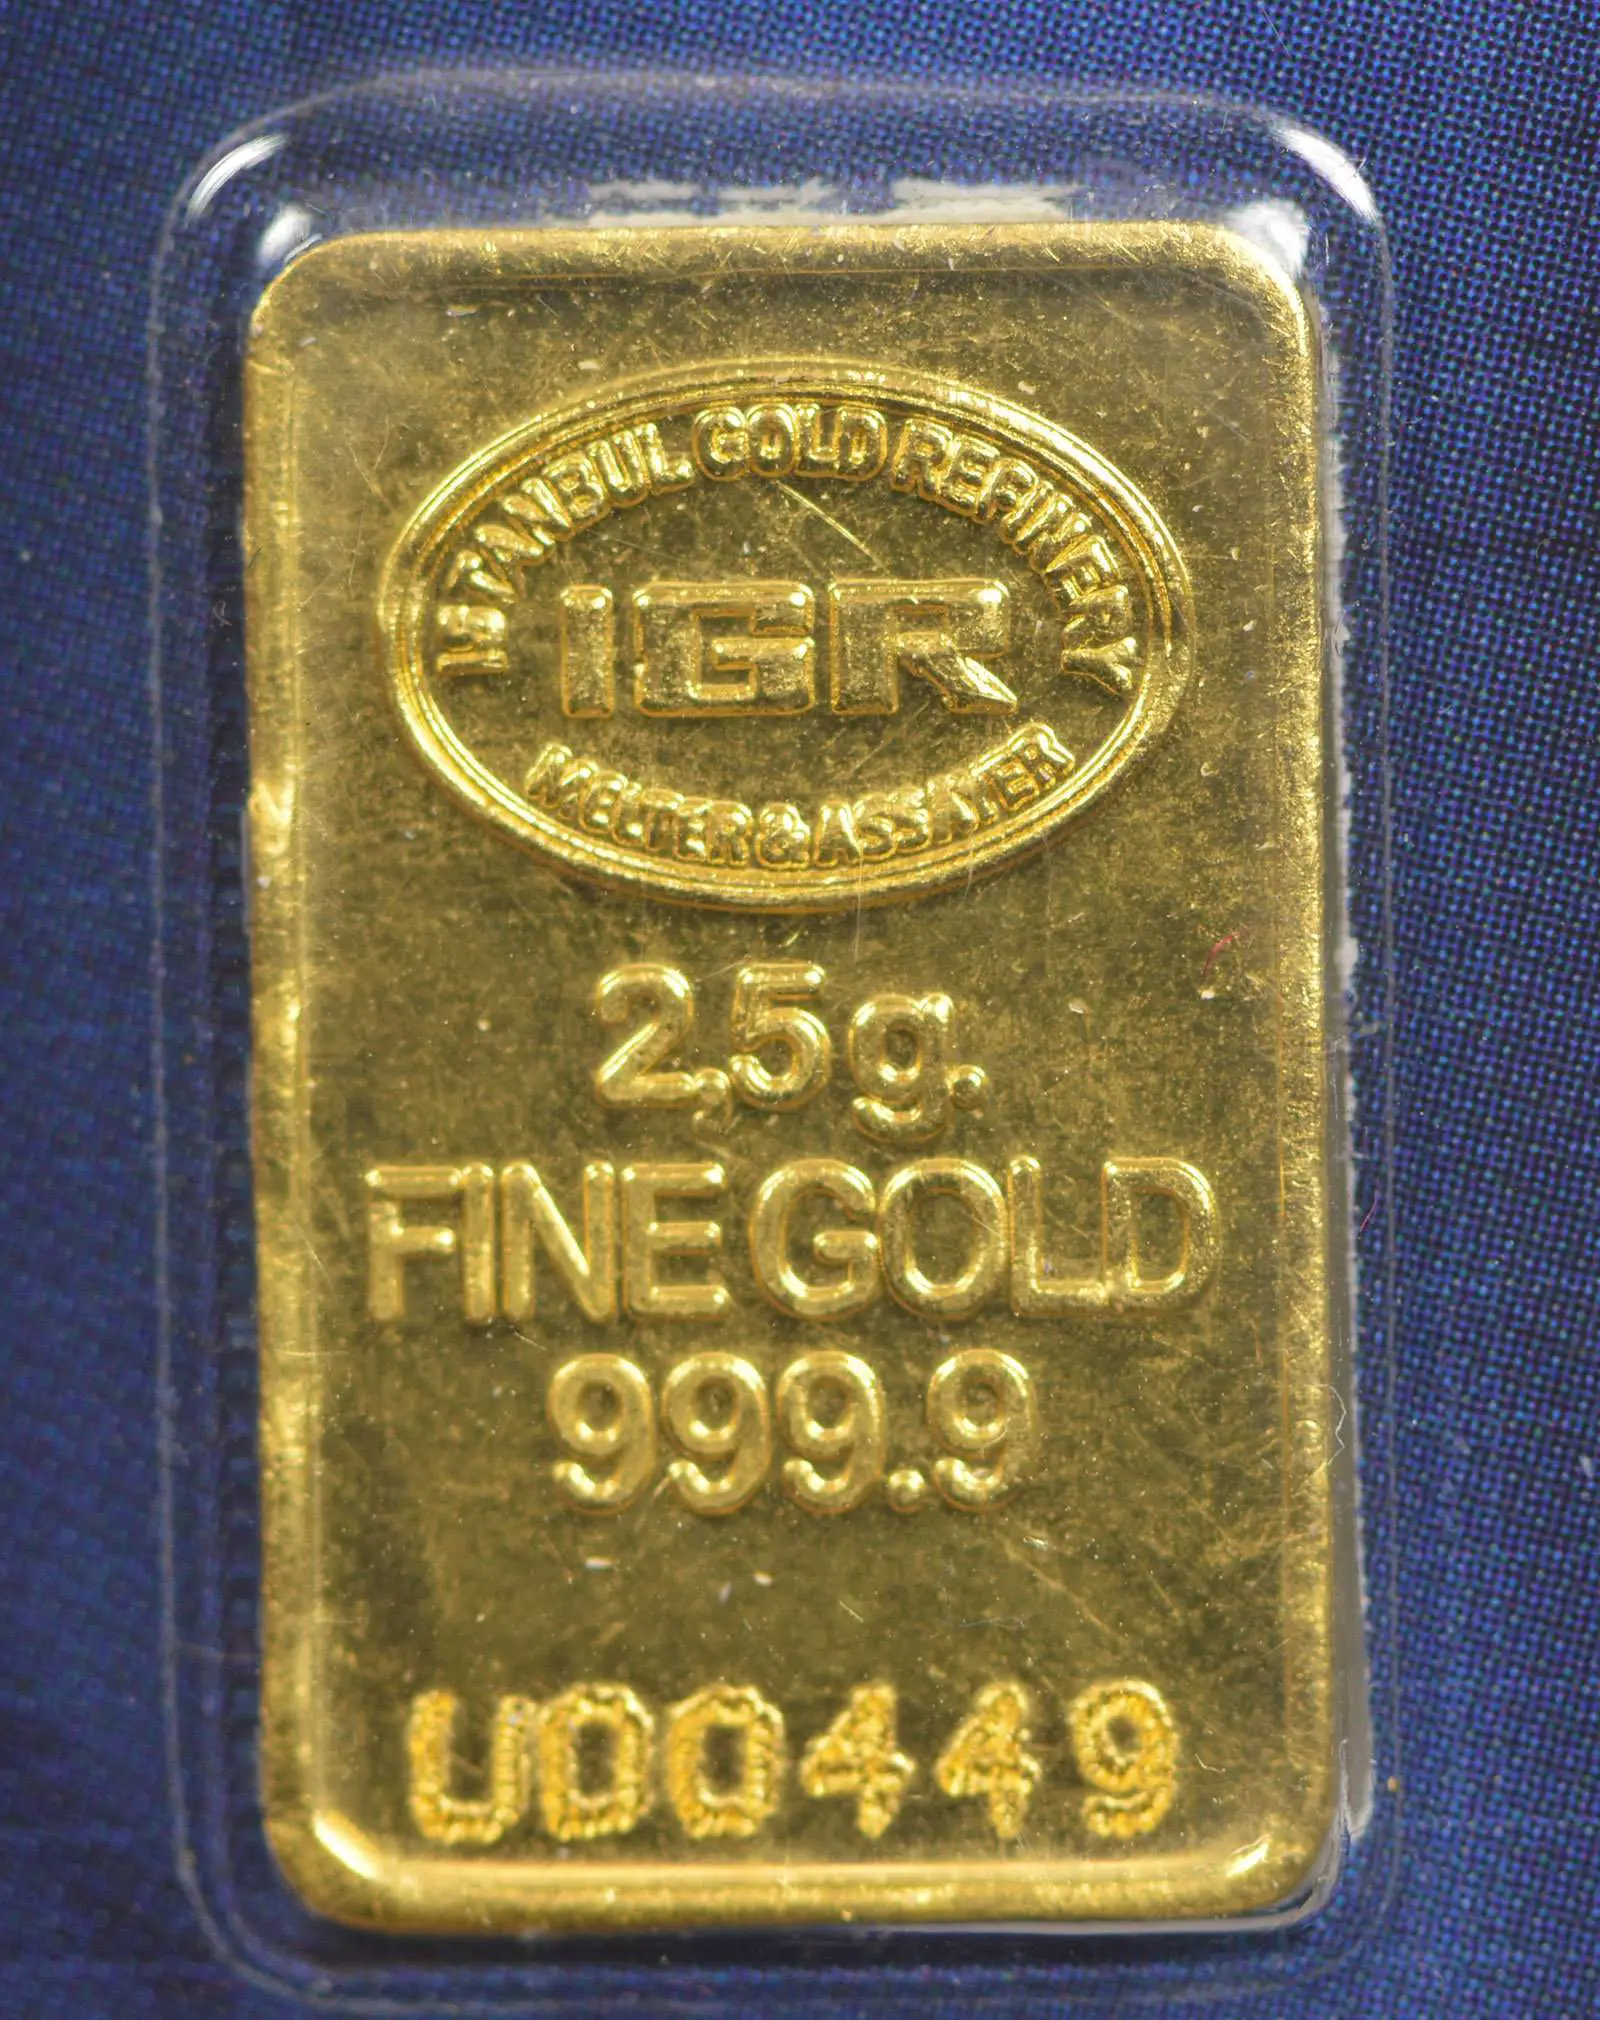 2.5 Gram 24K .9999 Pure Gold Bar